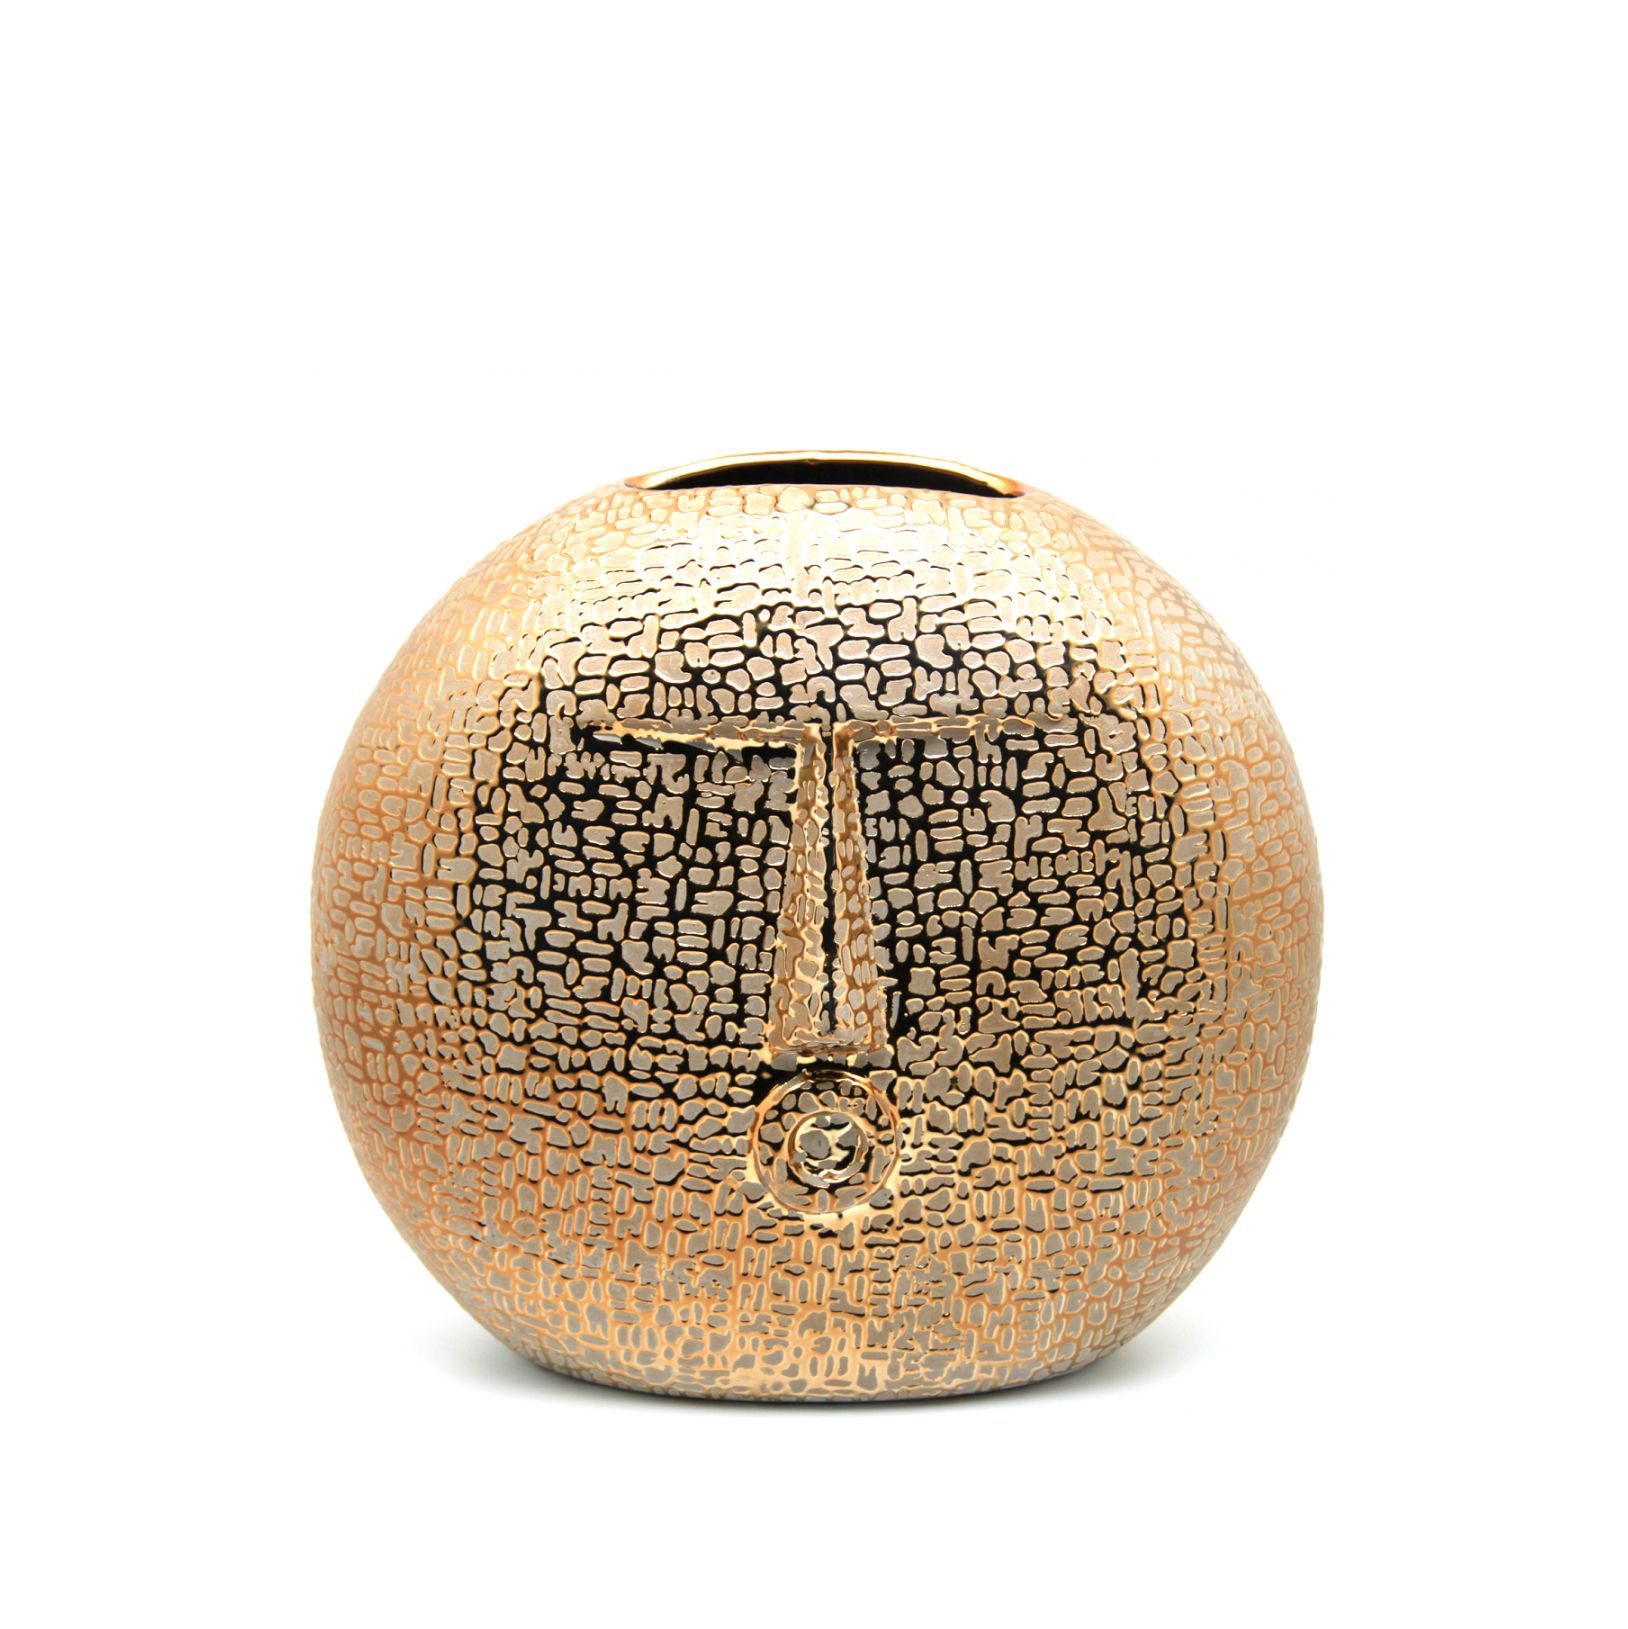 Vaza keramikinė aukso spl. 23x14x24 cm